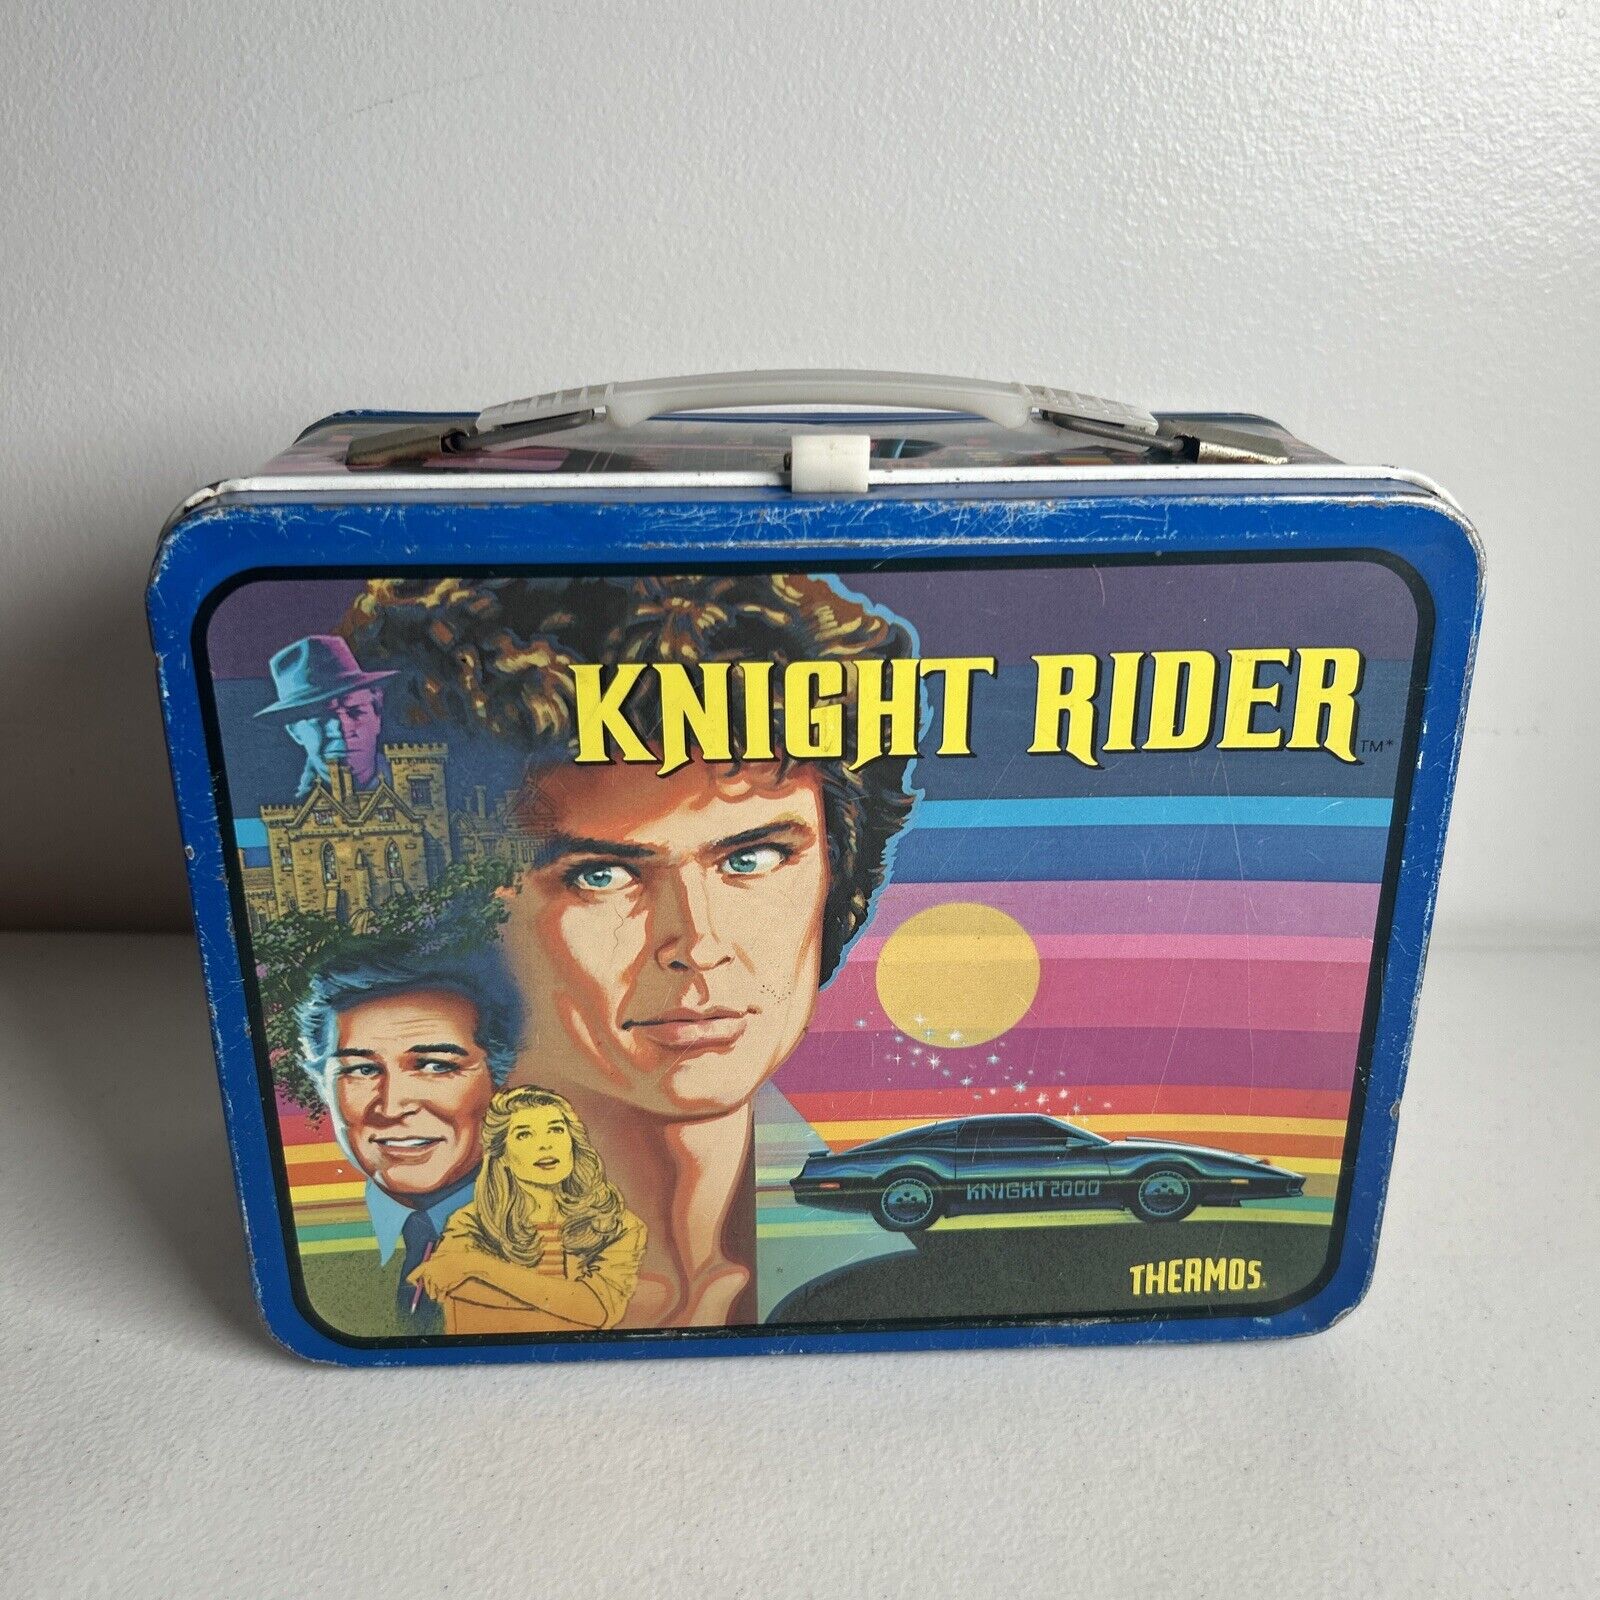 KNIGHT RIDER Vintage 1982/83 Tin Metal Lunch Box David Hasselhoff {No Thermos}